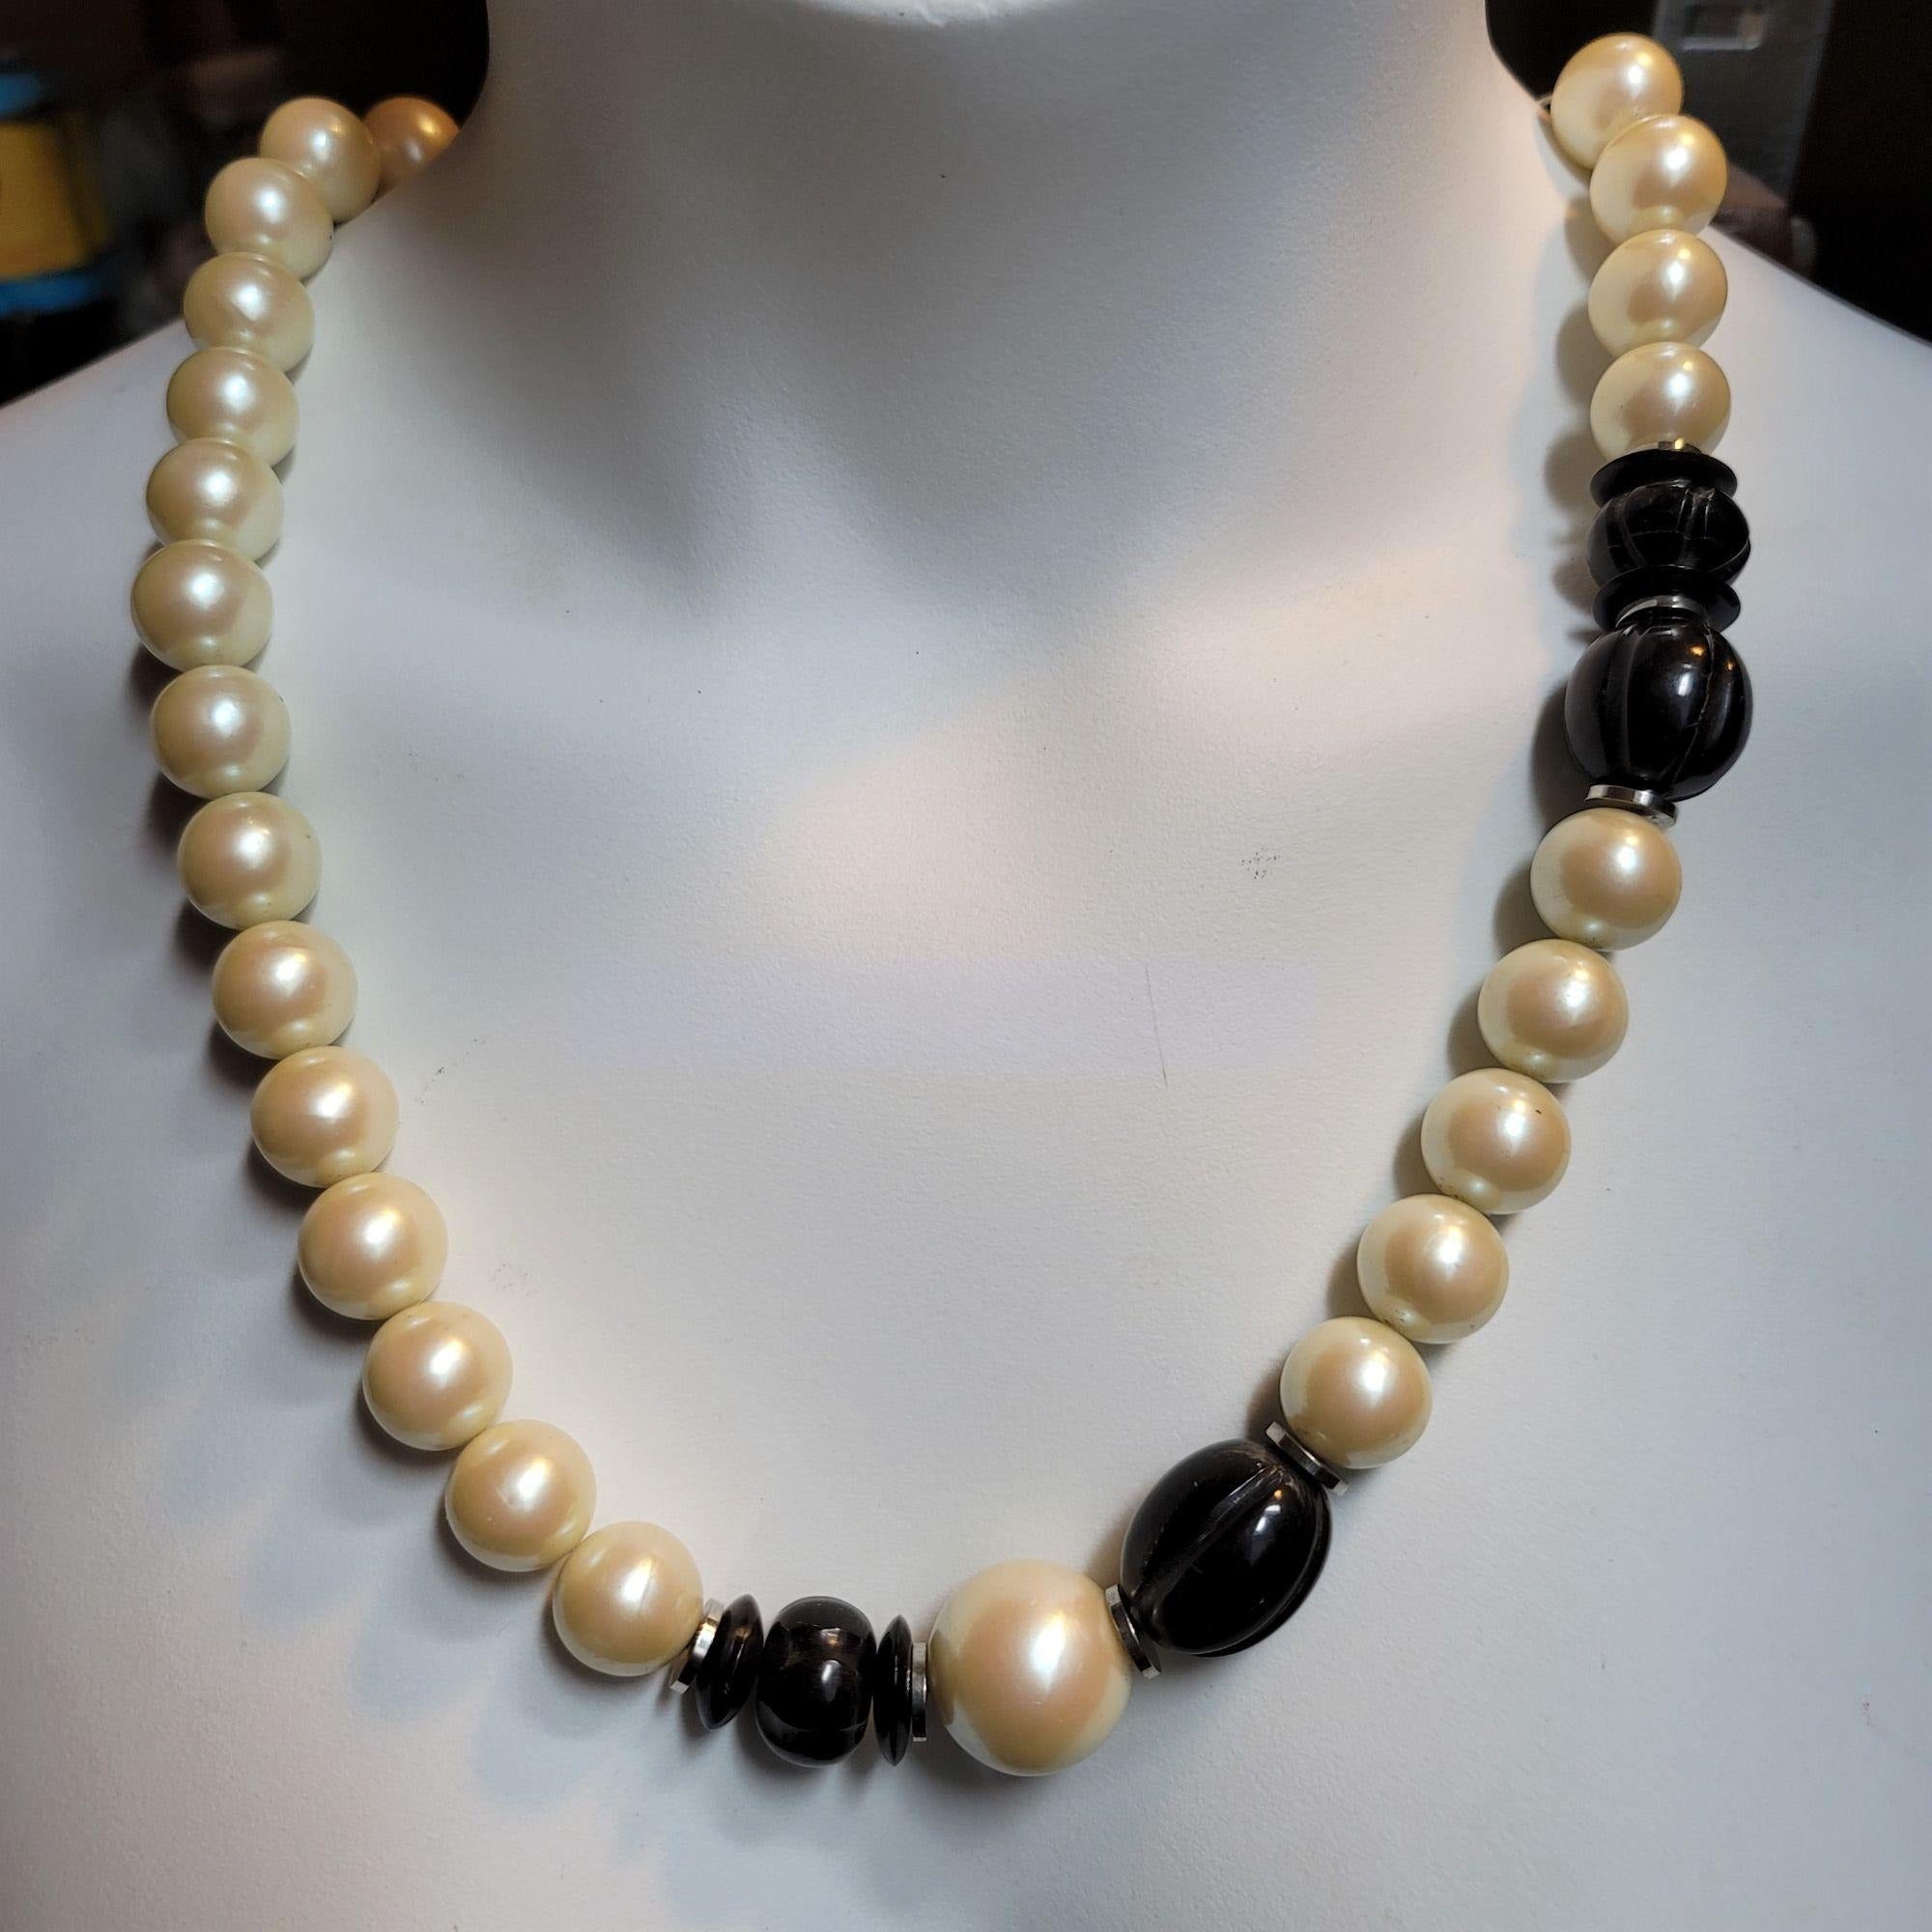 Jumbo Faux Pearl & Black Bead Necklace Hidden Clasp Chunky